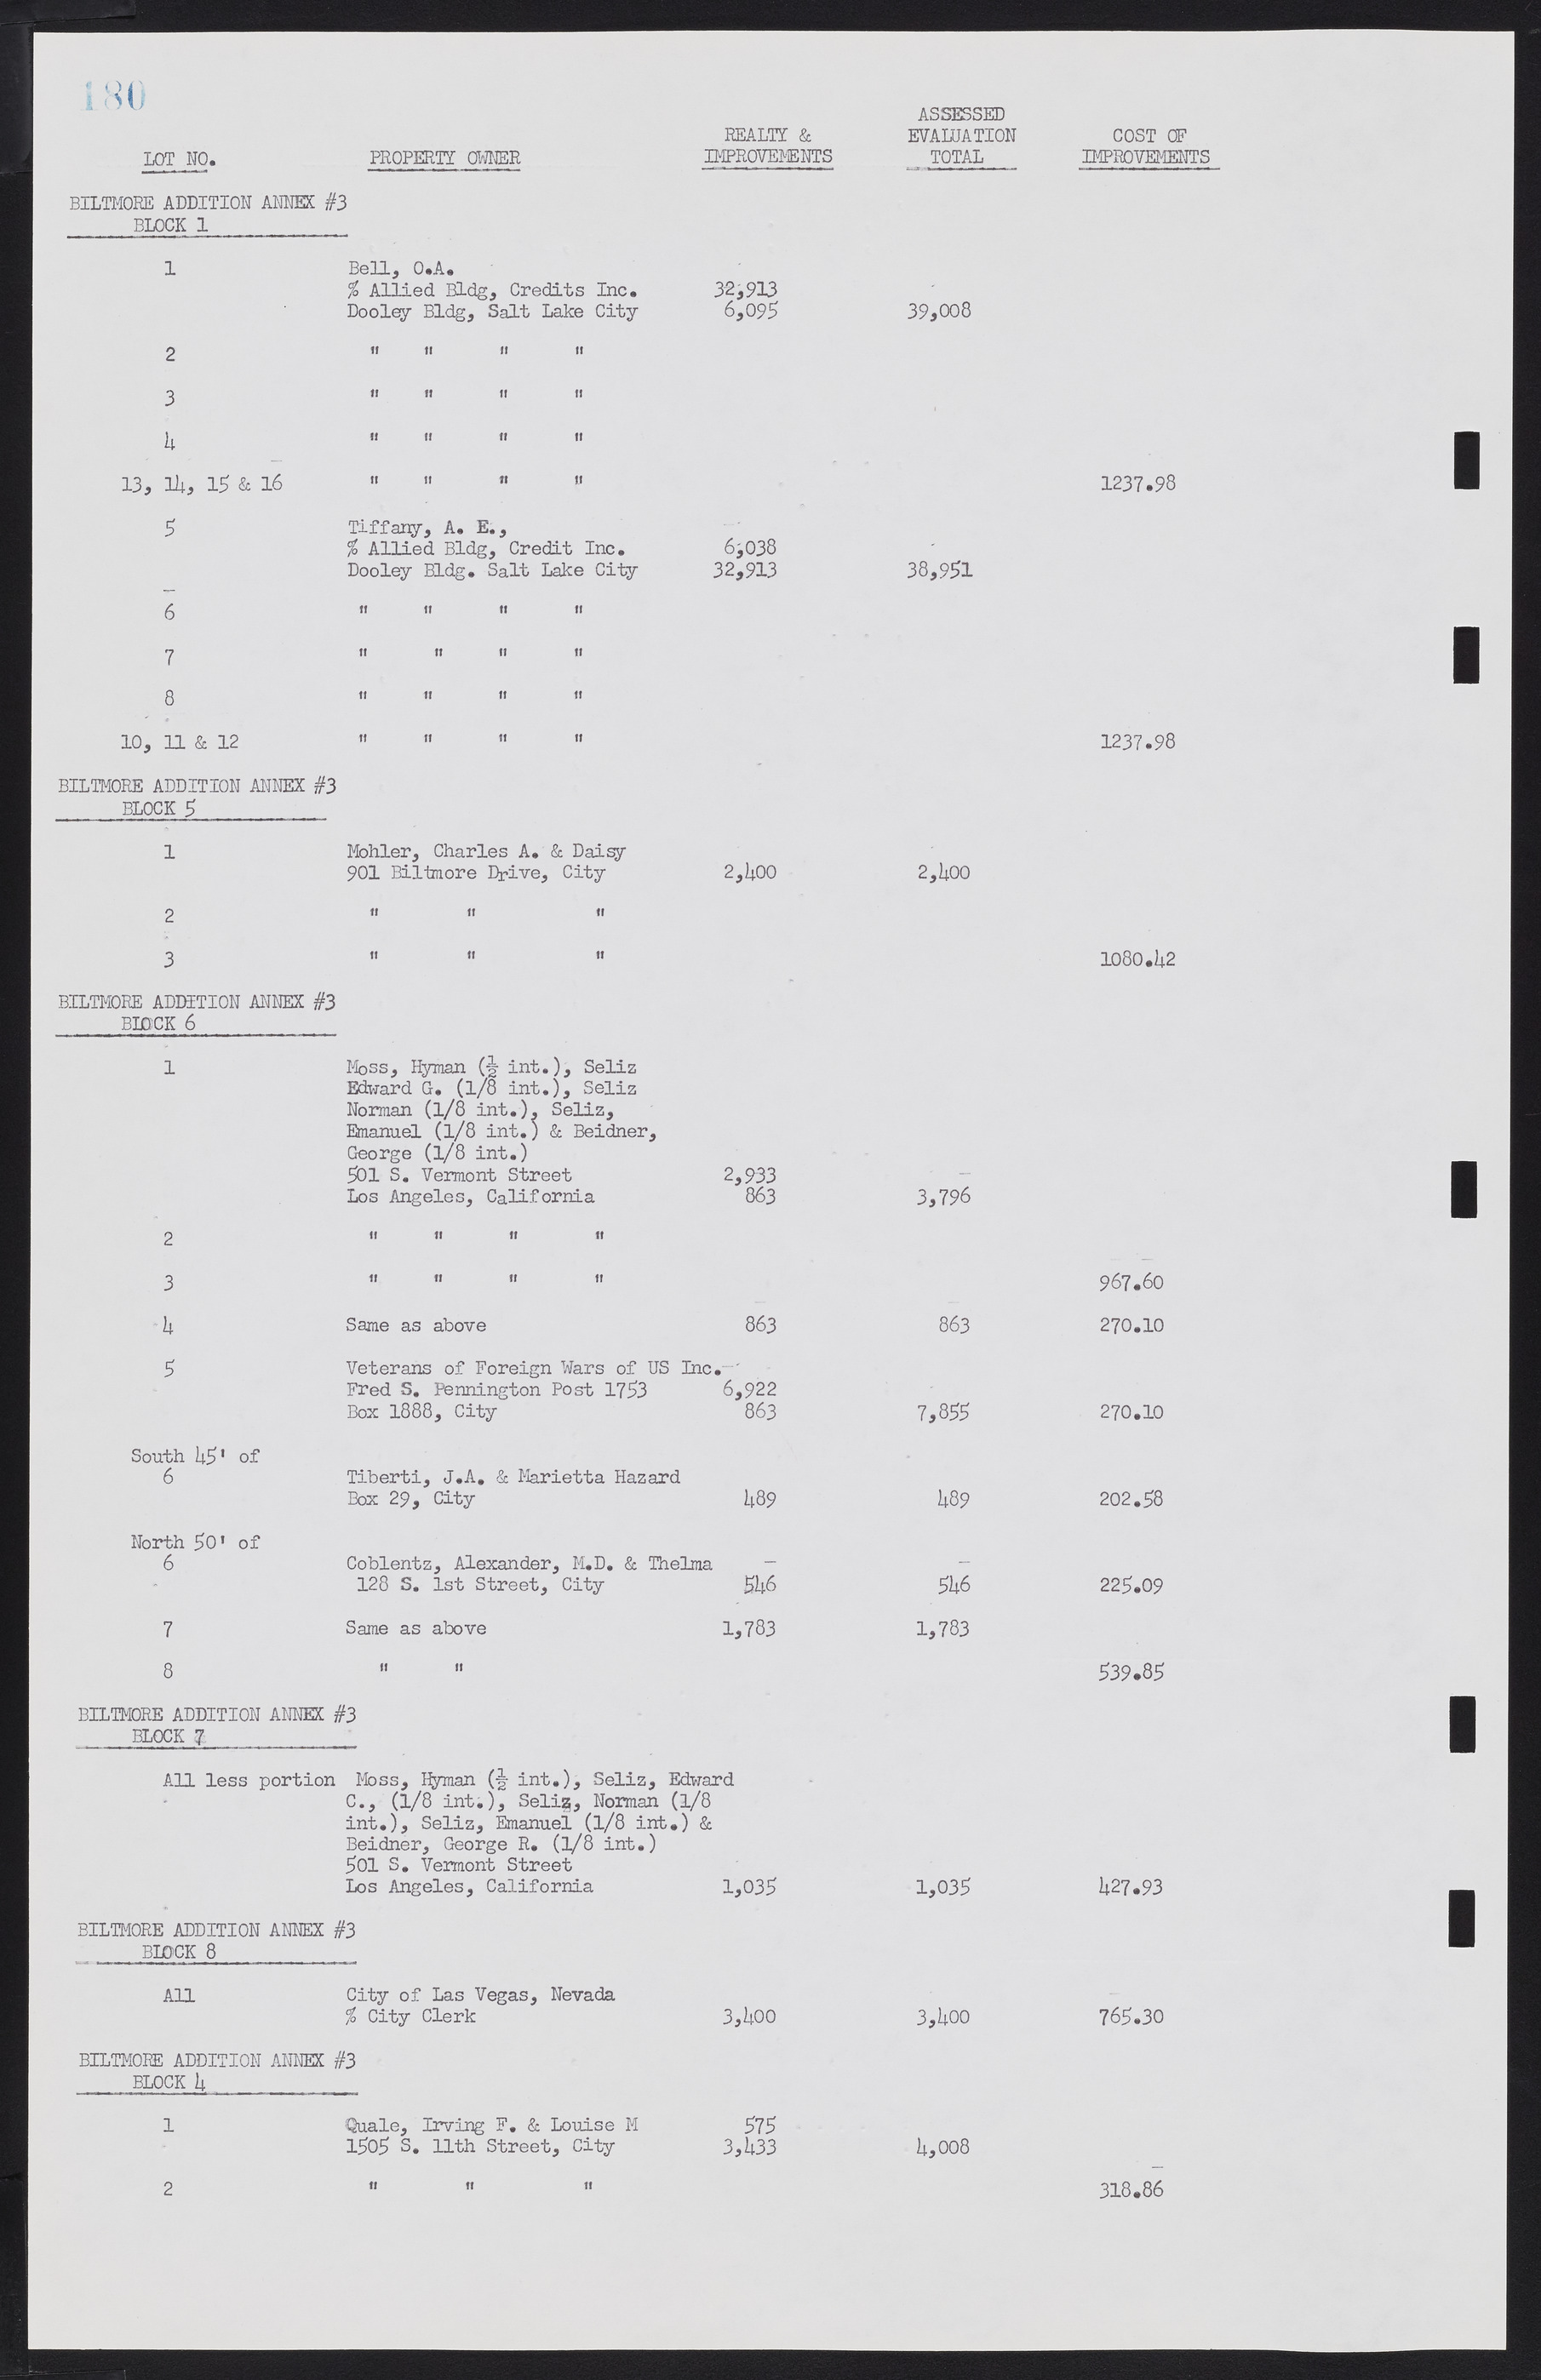 Las Vegas City Commission Minutes, February 17, 1954 to September 21, 1955, lvc000009-186